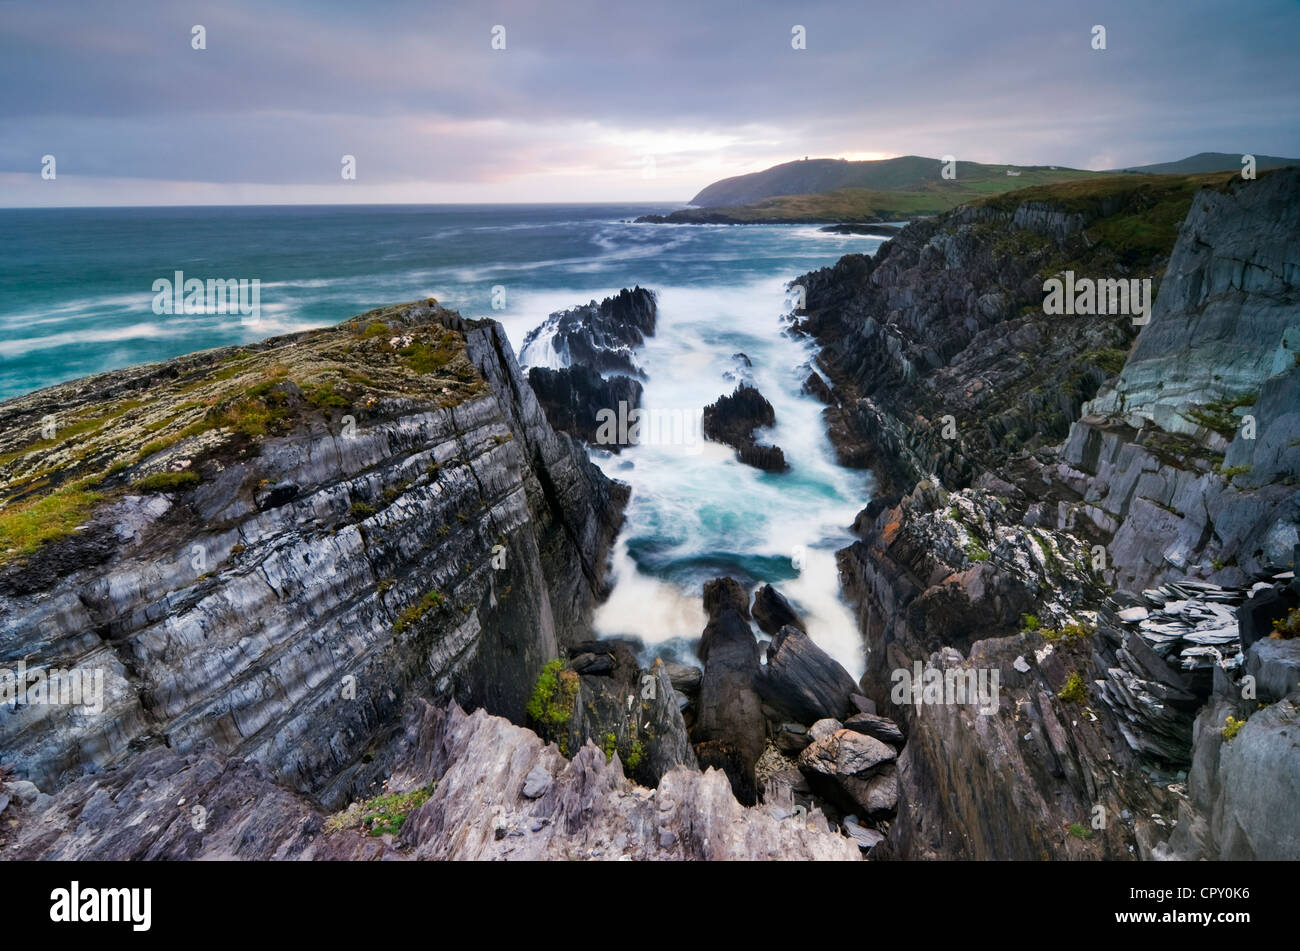 Cliffs view over Atlantic Ocean in Crookhaven, Ireland Stock Photo